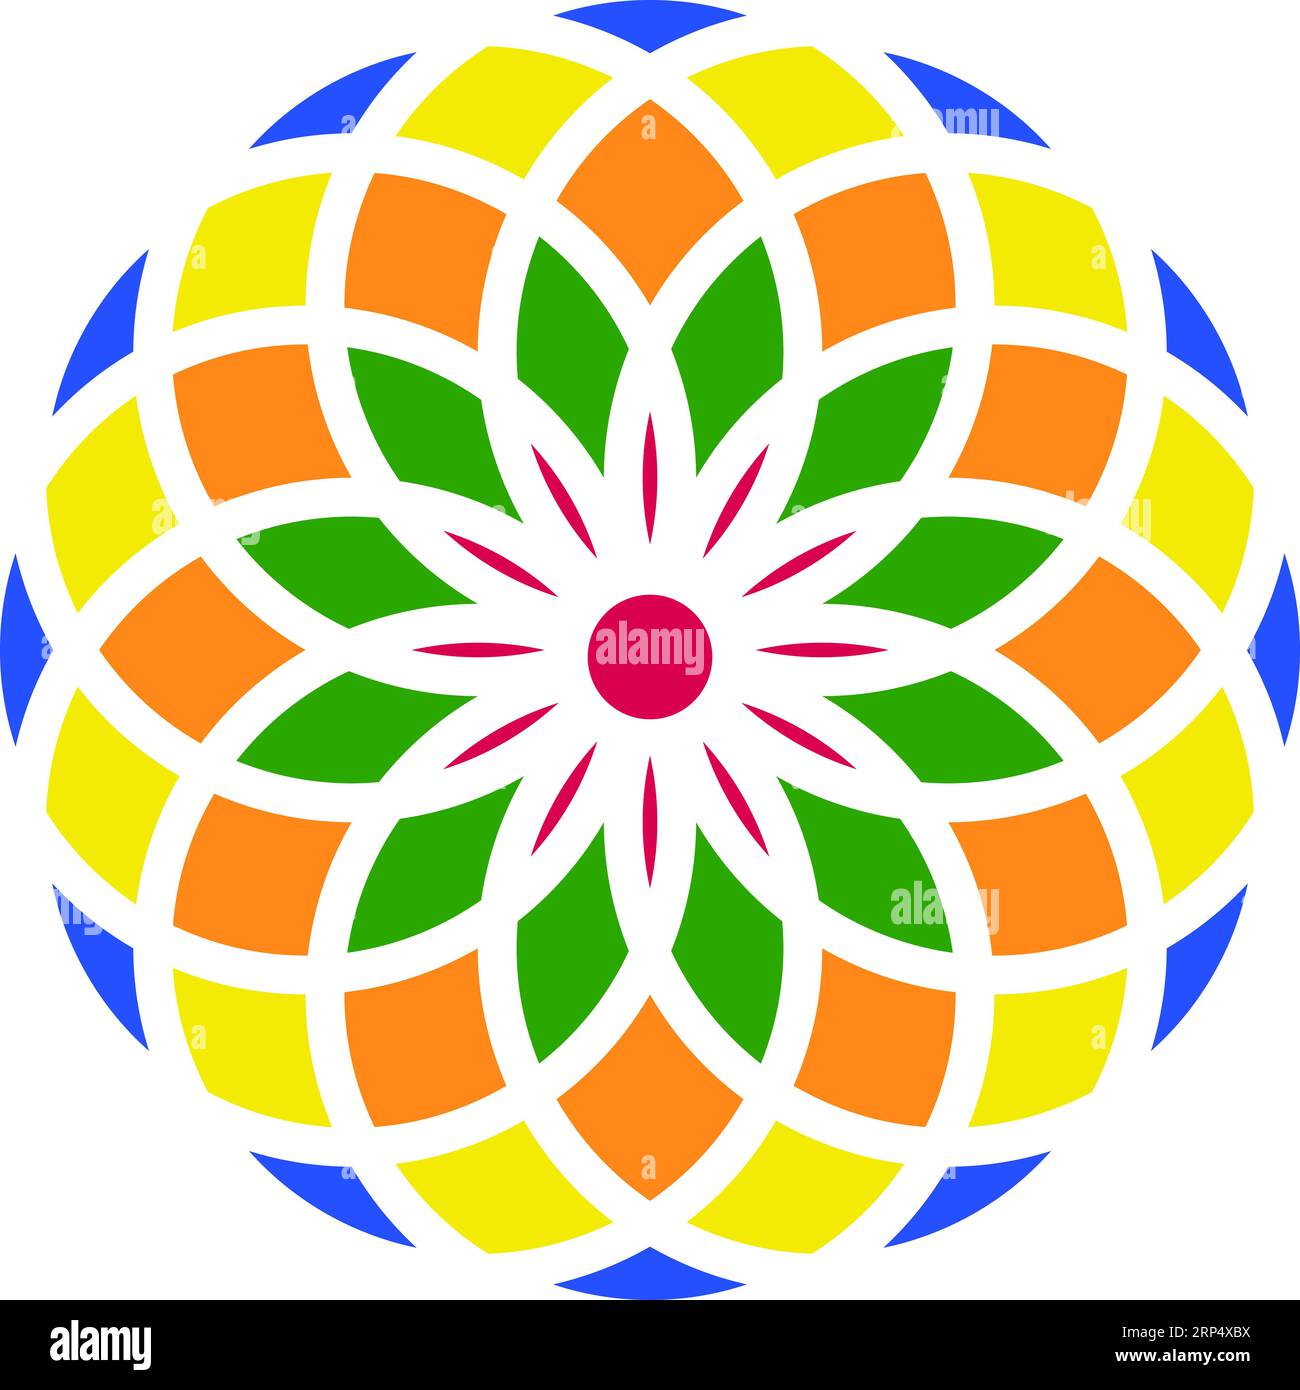 Göttliche Blume Allah Chakras führendes Gott-Symbol Großzügigkeit Stock Illustration Stock Vektor